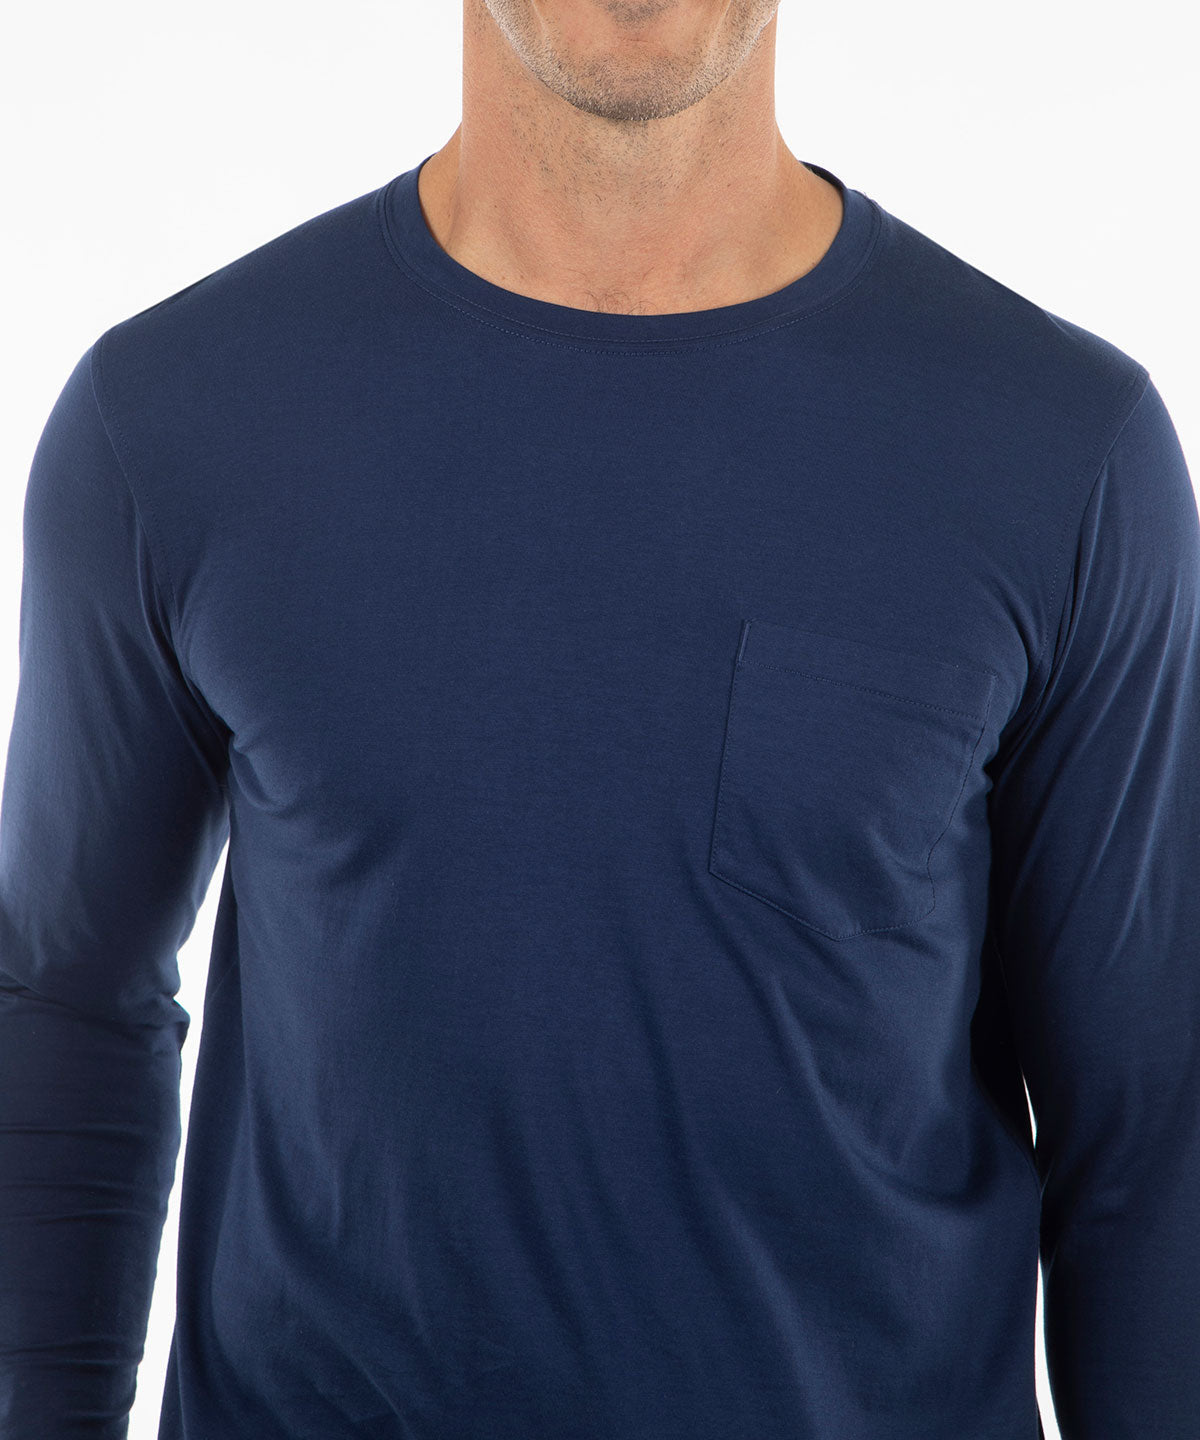 Kirkland Signature Men's Pima Cotton Polo Shirts , Navy, XL